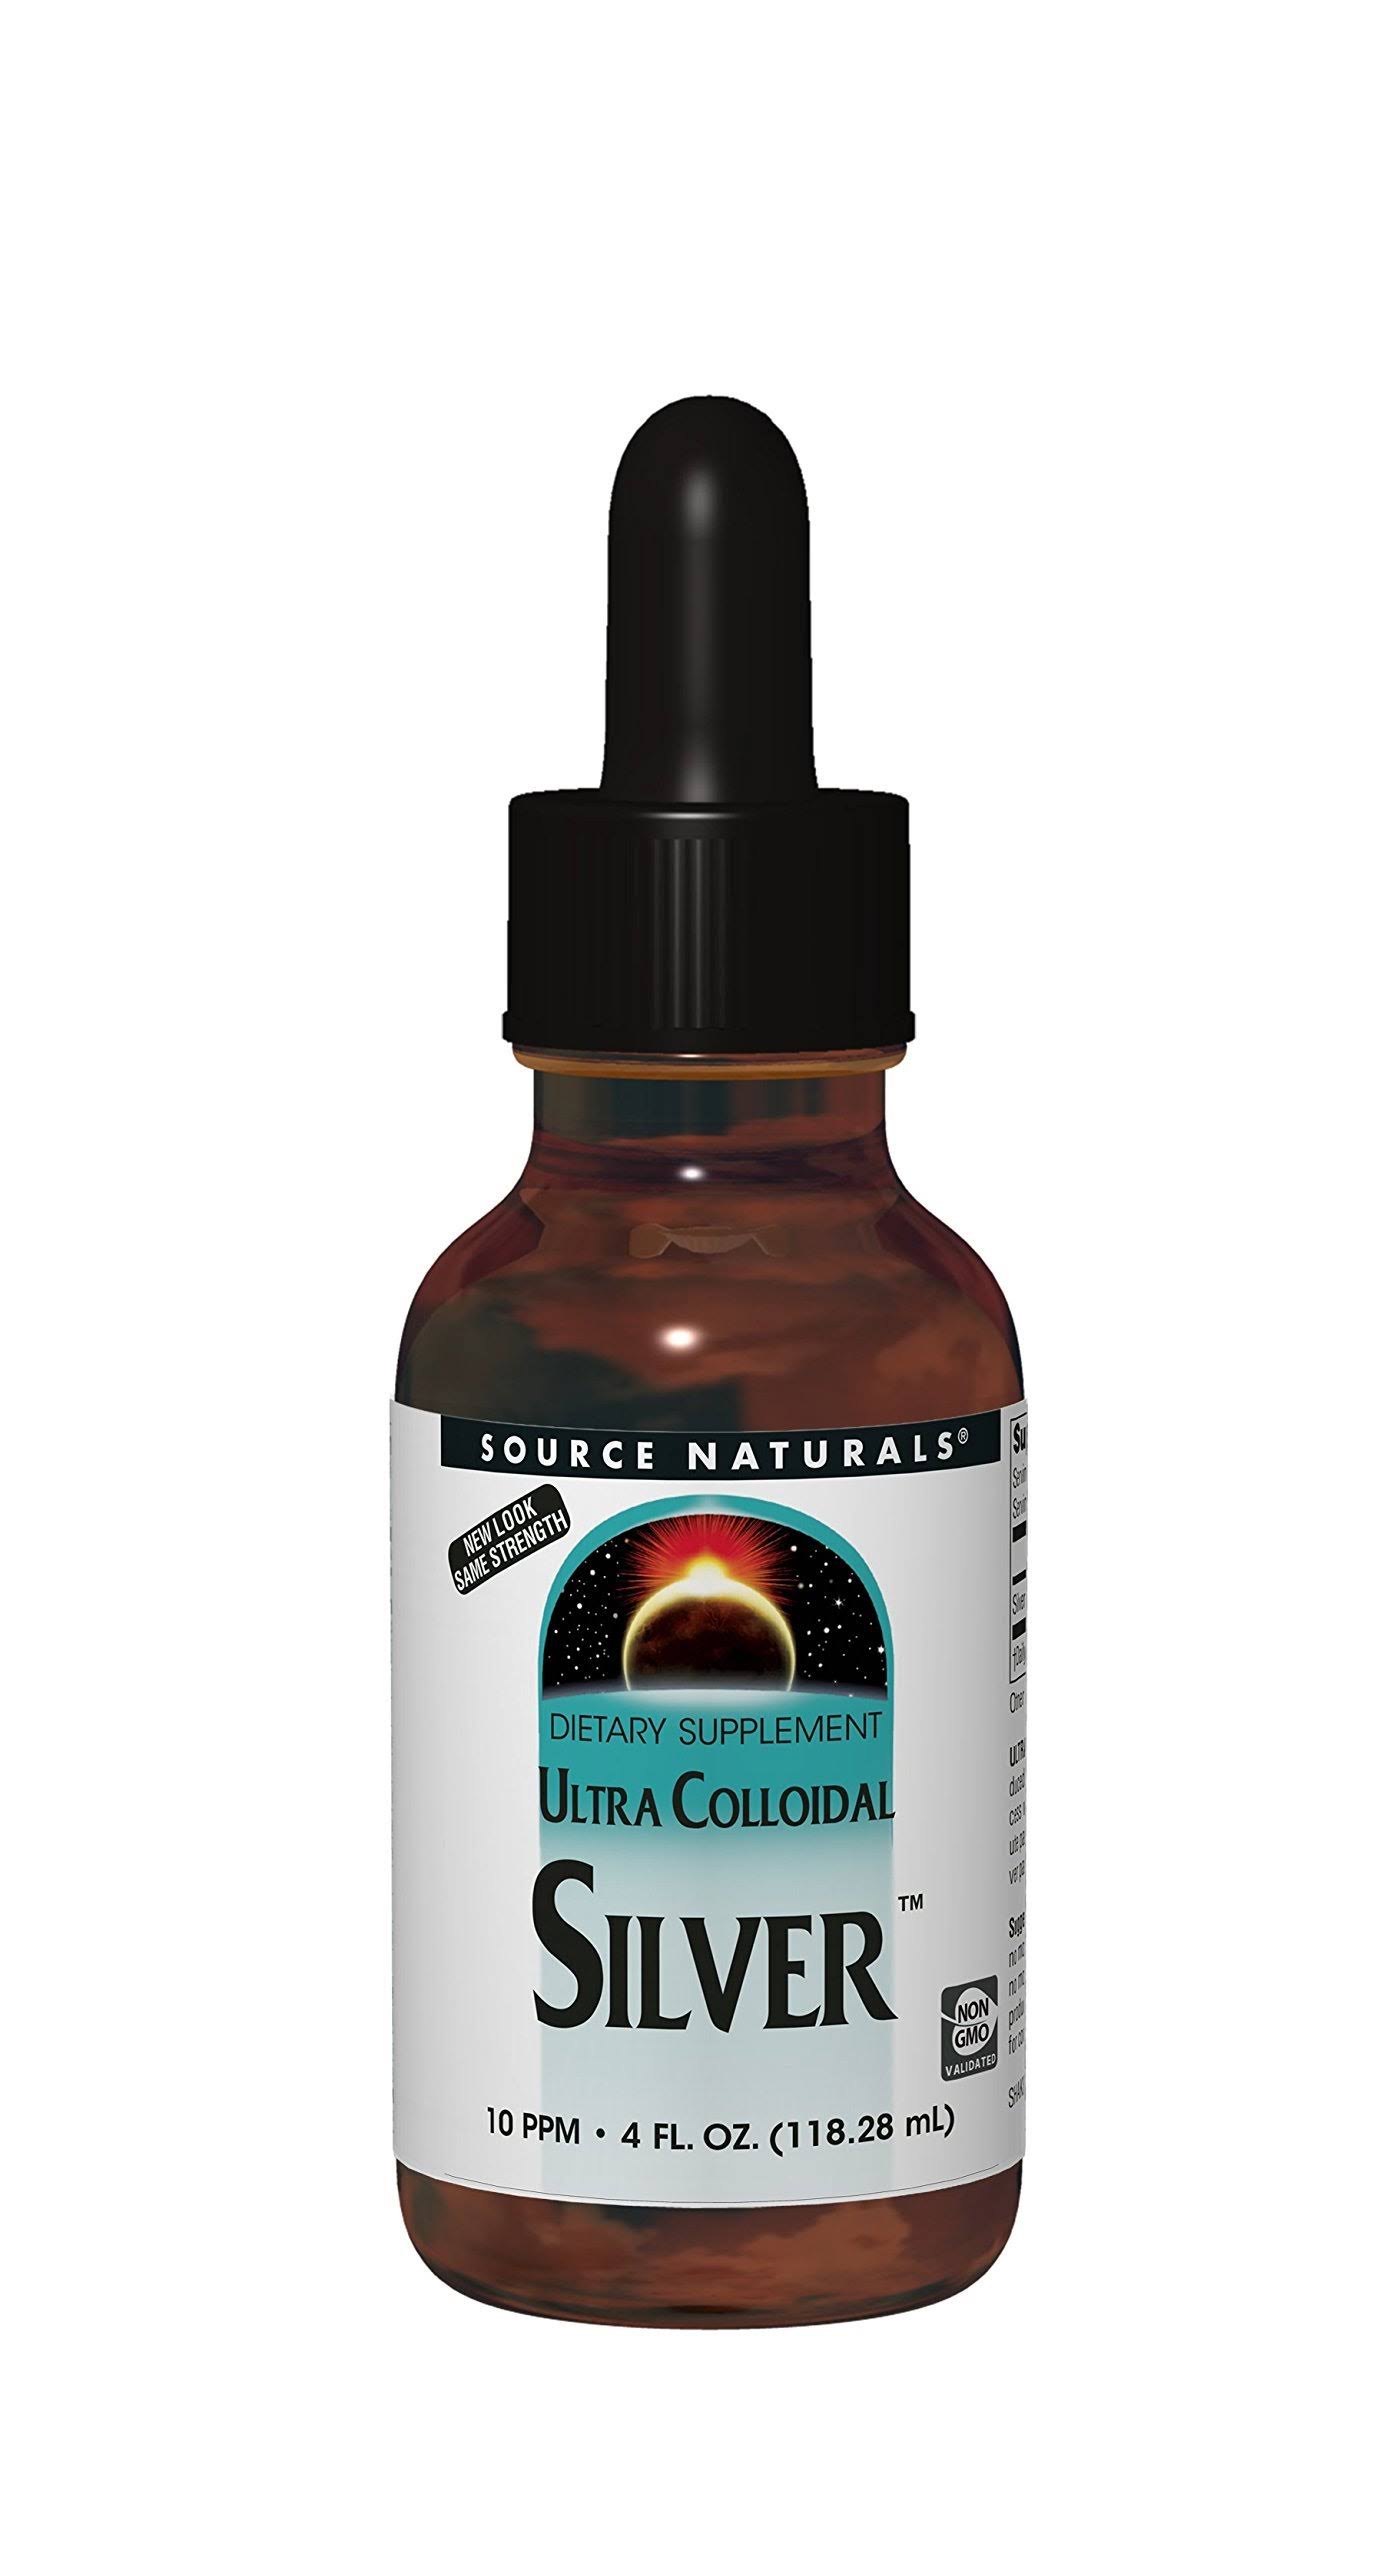 Source Naturals Ultra Colloidal Silver Dietary Supplement - 4oz